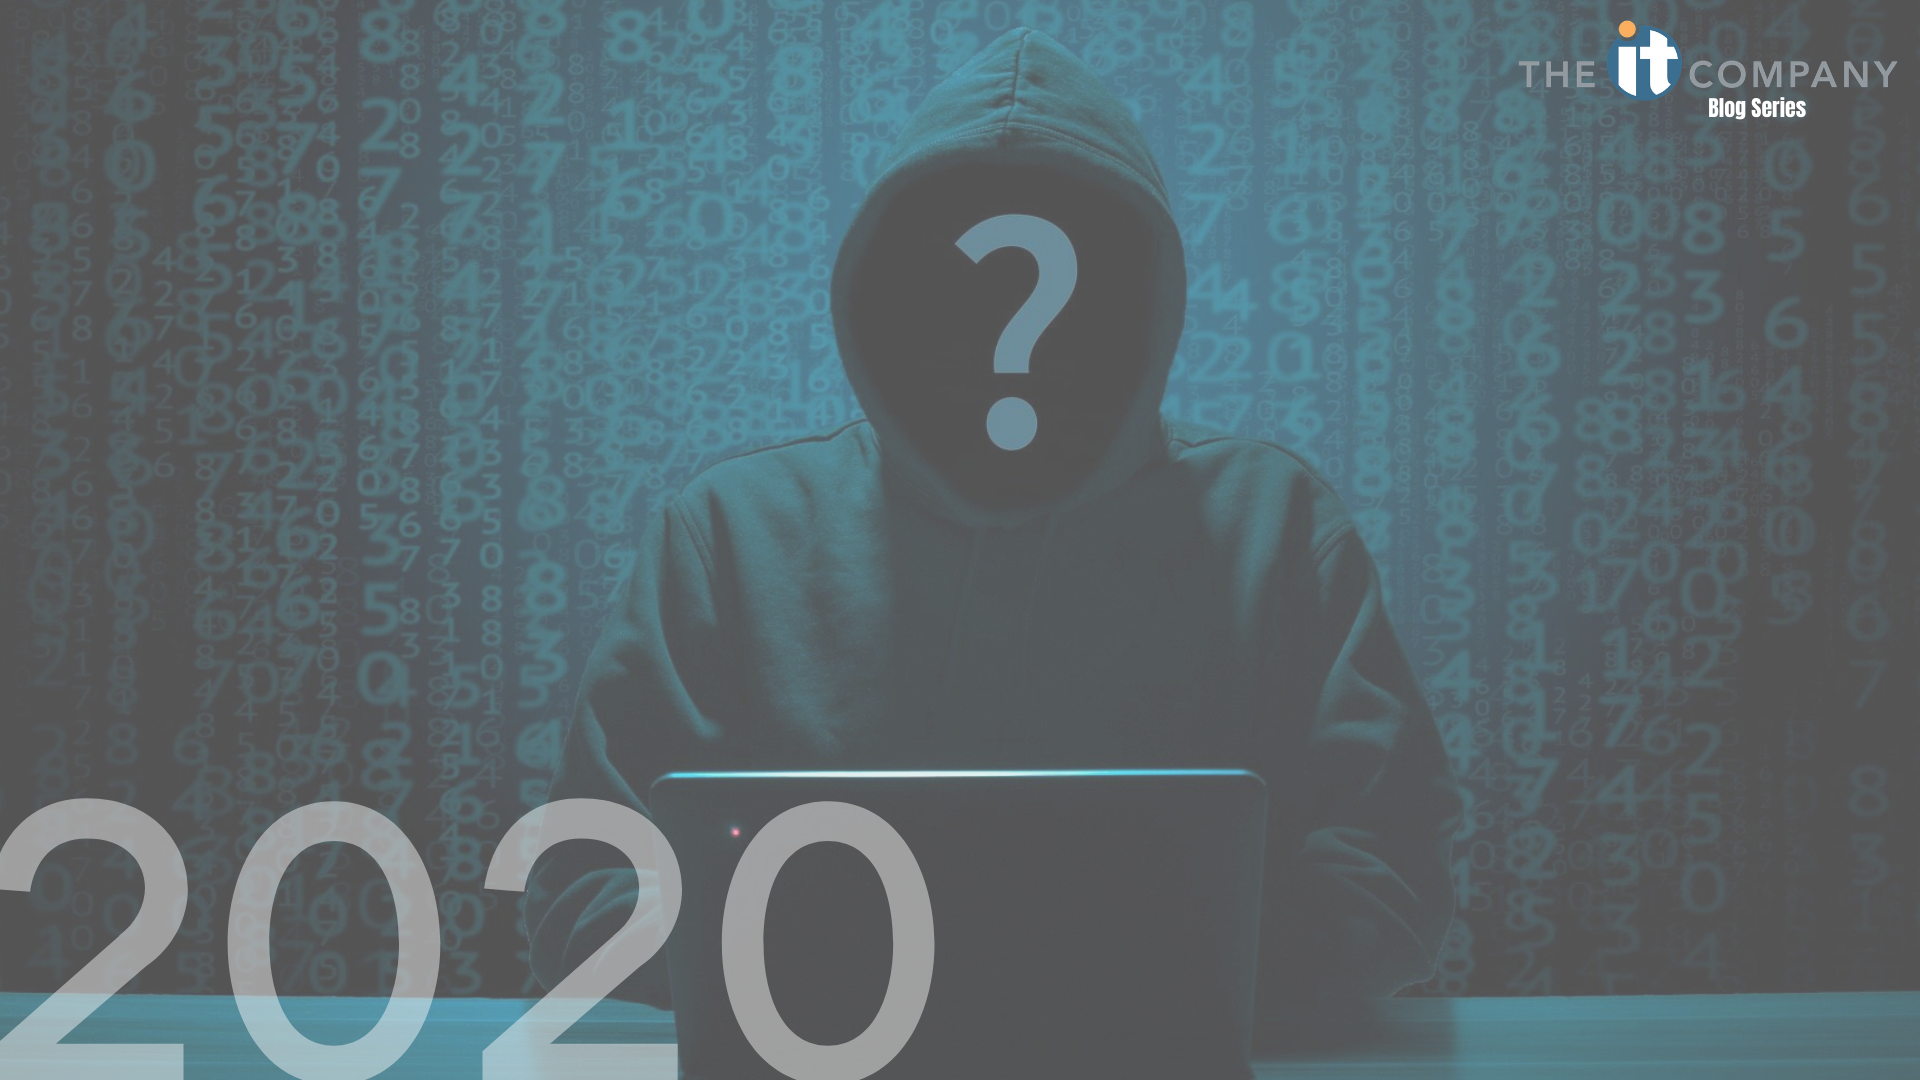 6 Worst Hacks of 2020